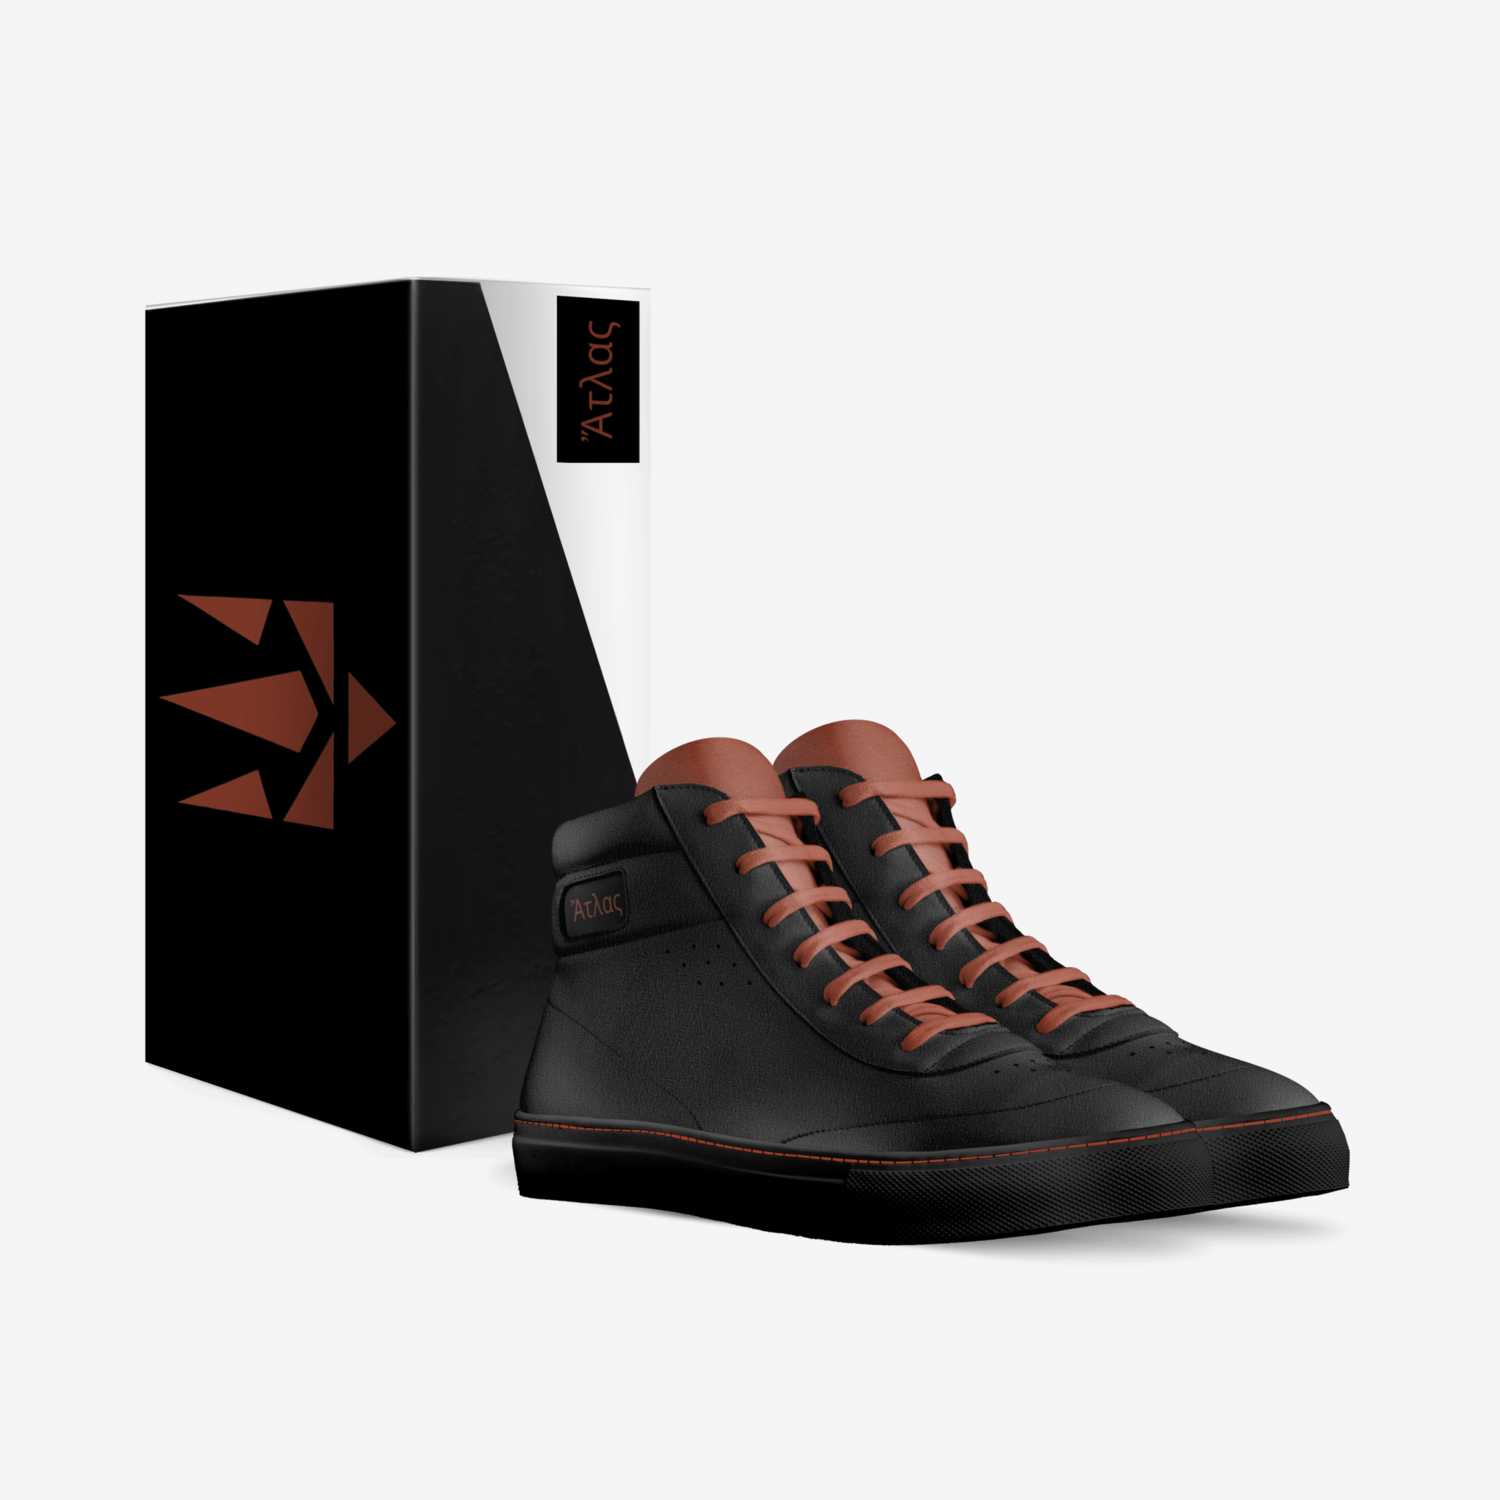 Atlas custom made in Italy shoes by Ryan G. Rgp Enterprises, Llc | Box view